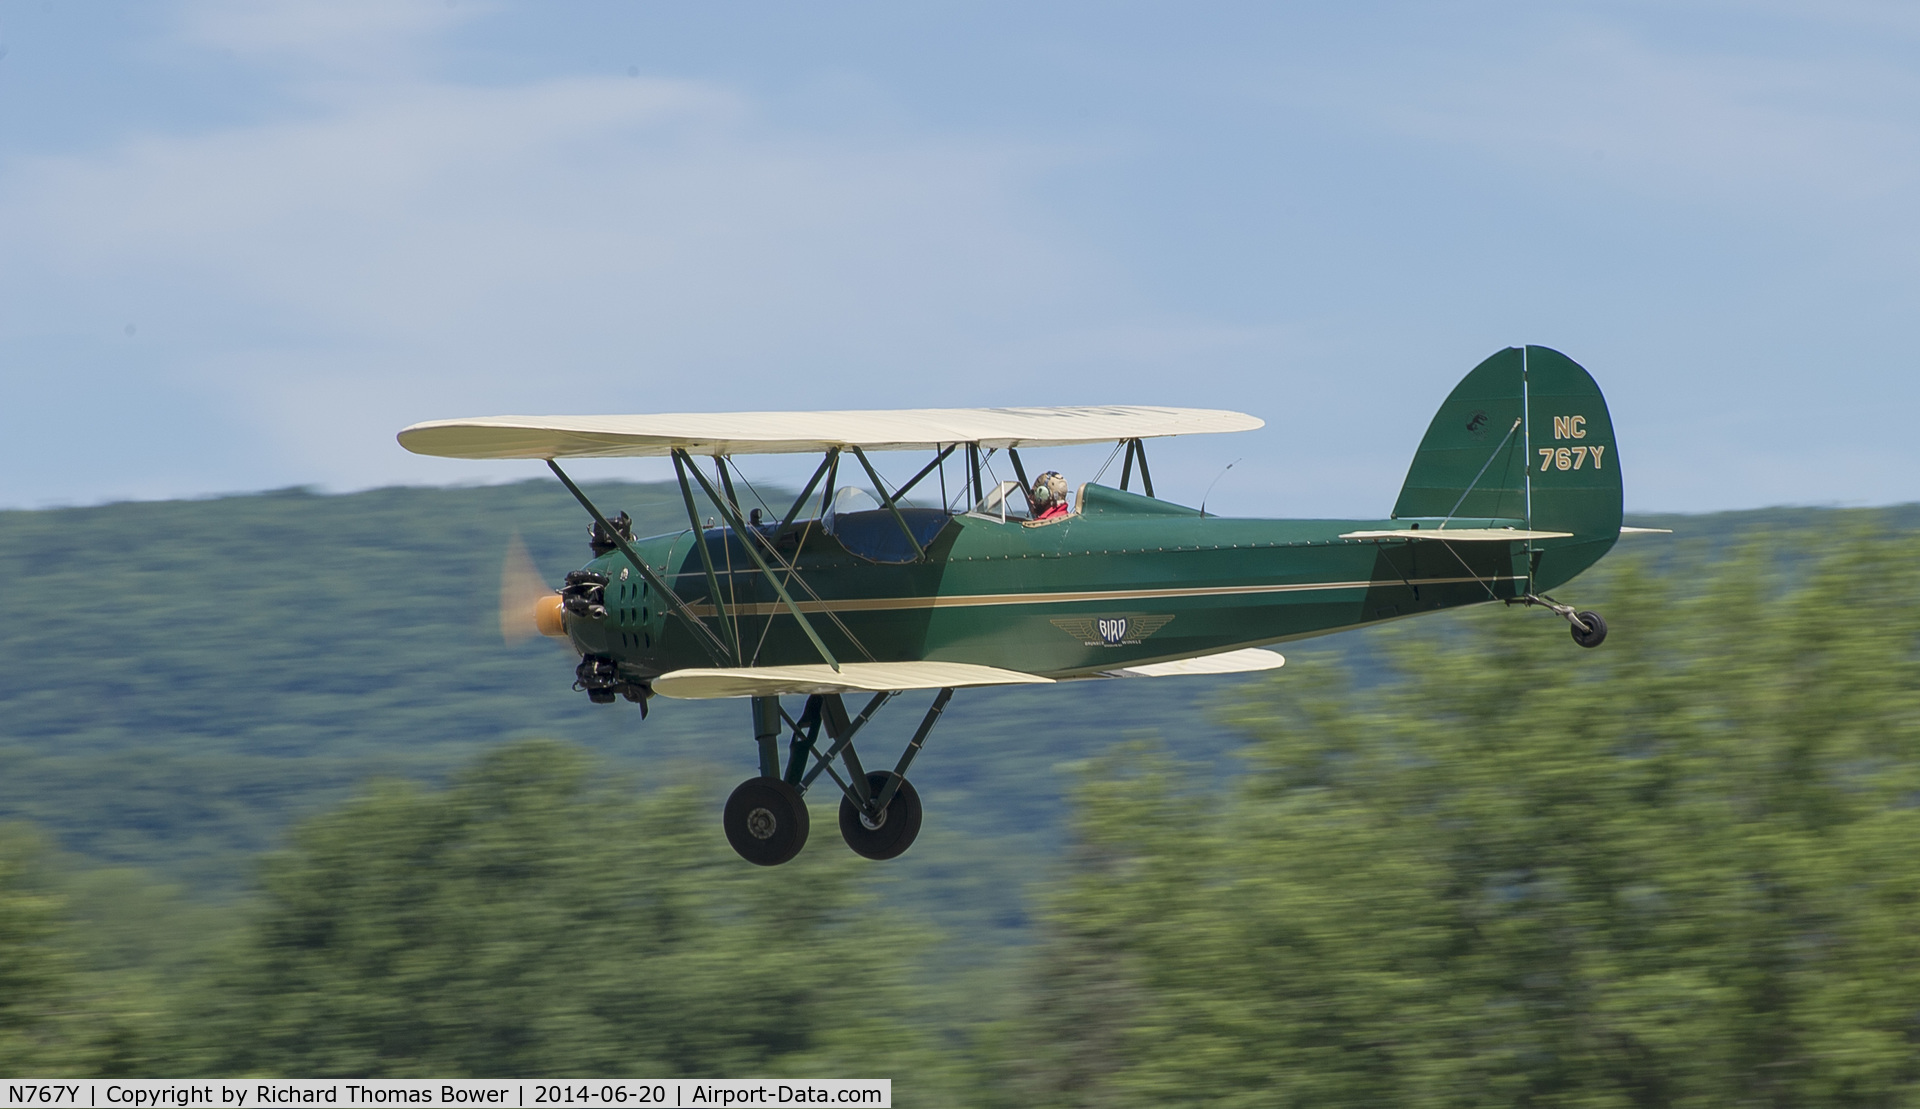 N767Y, 1930 Bird BK C/N 2054-34, As seen at the 2014 Sentimental Journey Fly-In at Lock Haven, Pennsylvania.